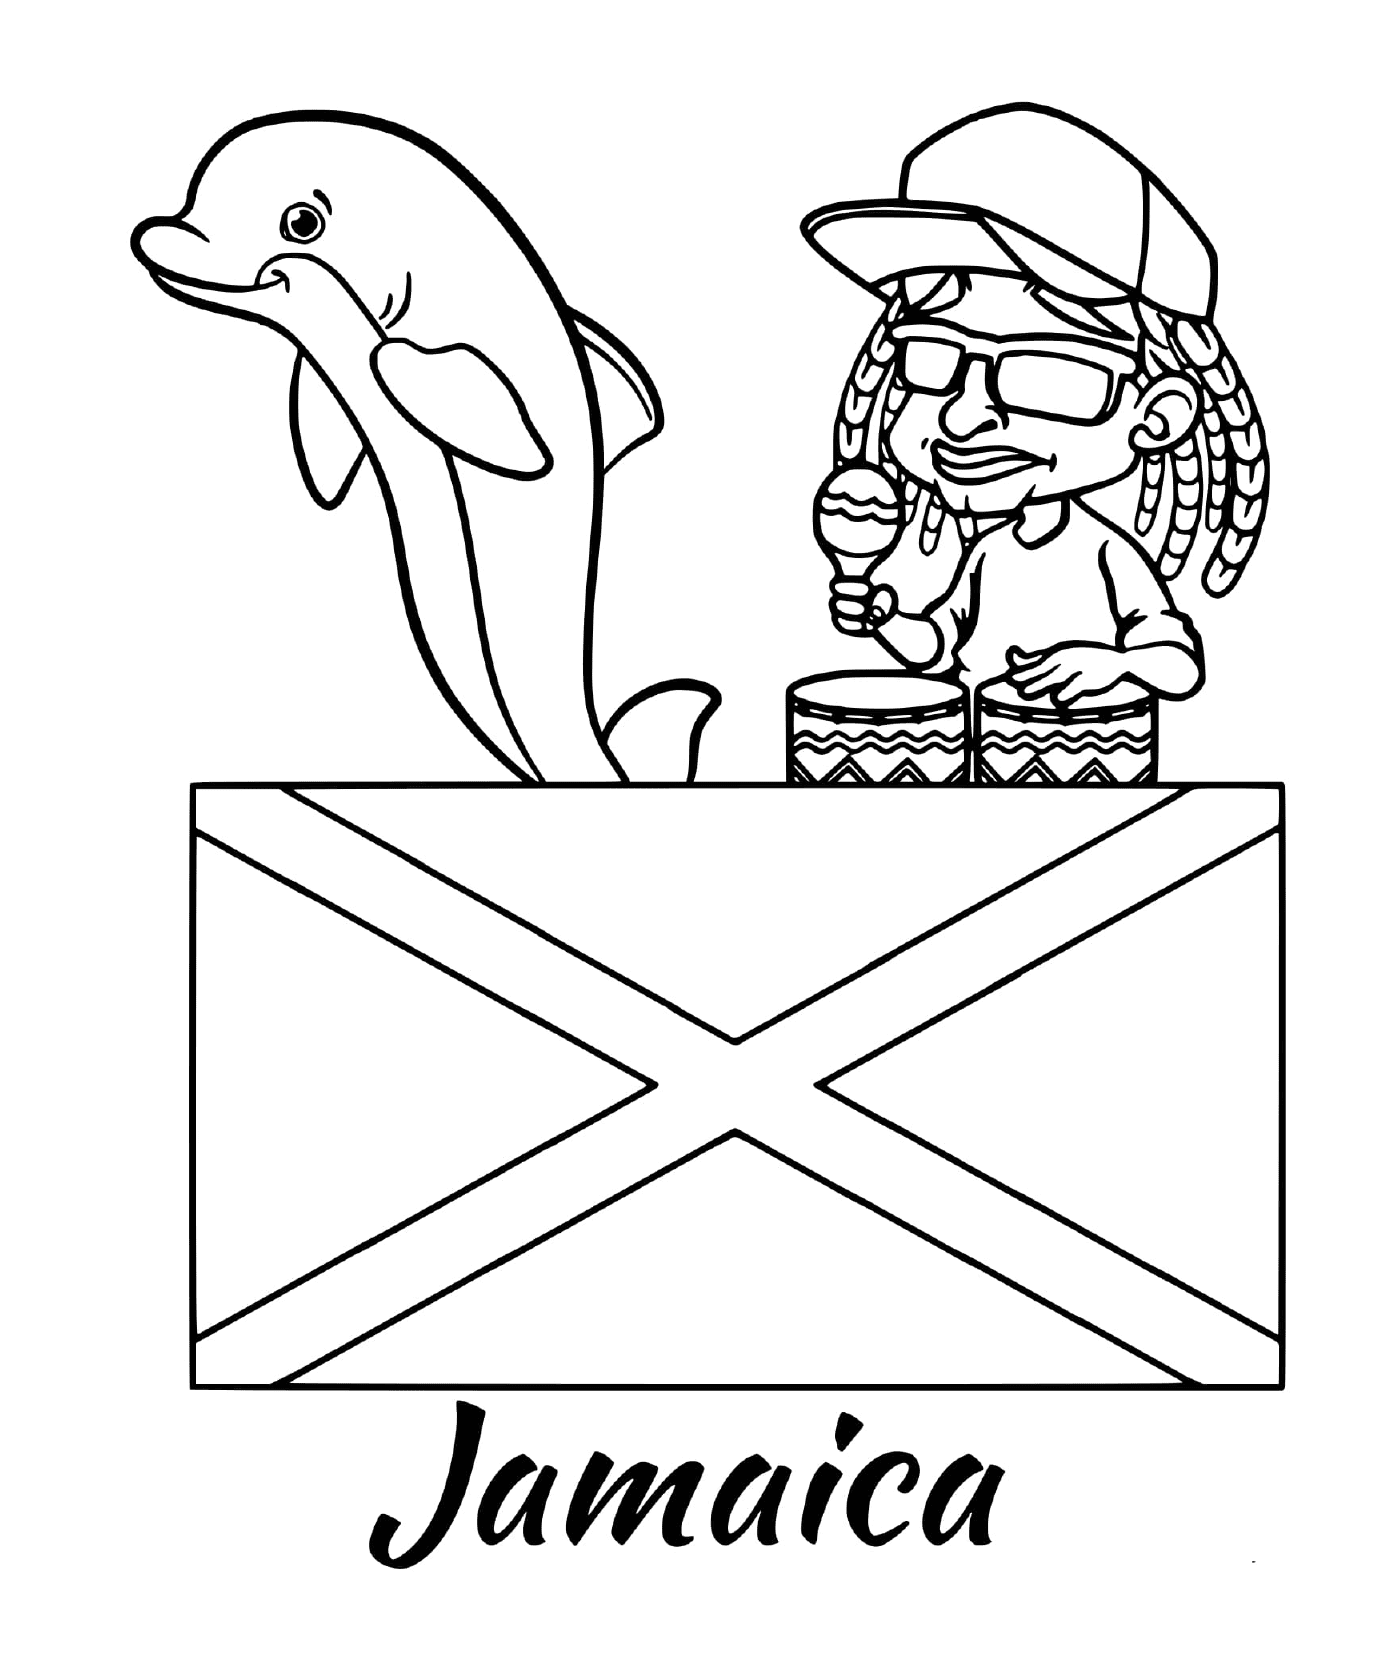  Флаг Ямайки, регги 